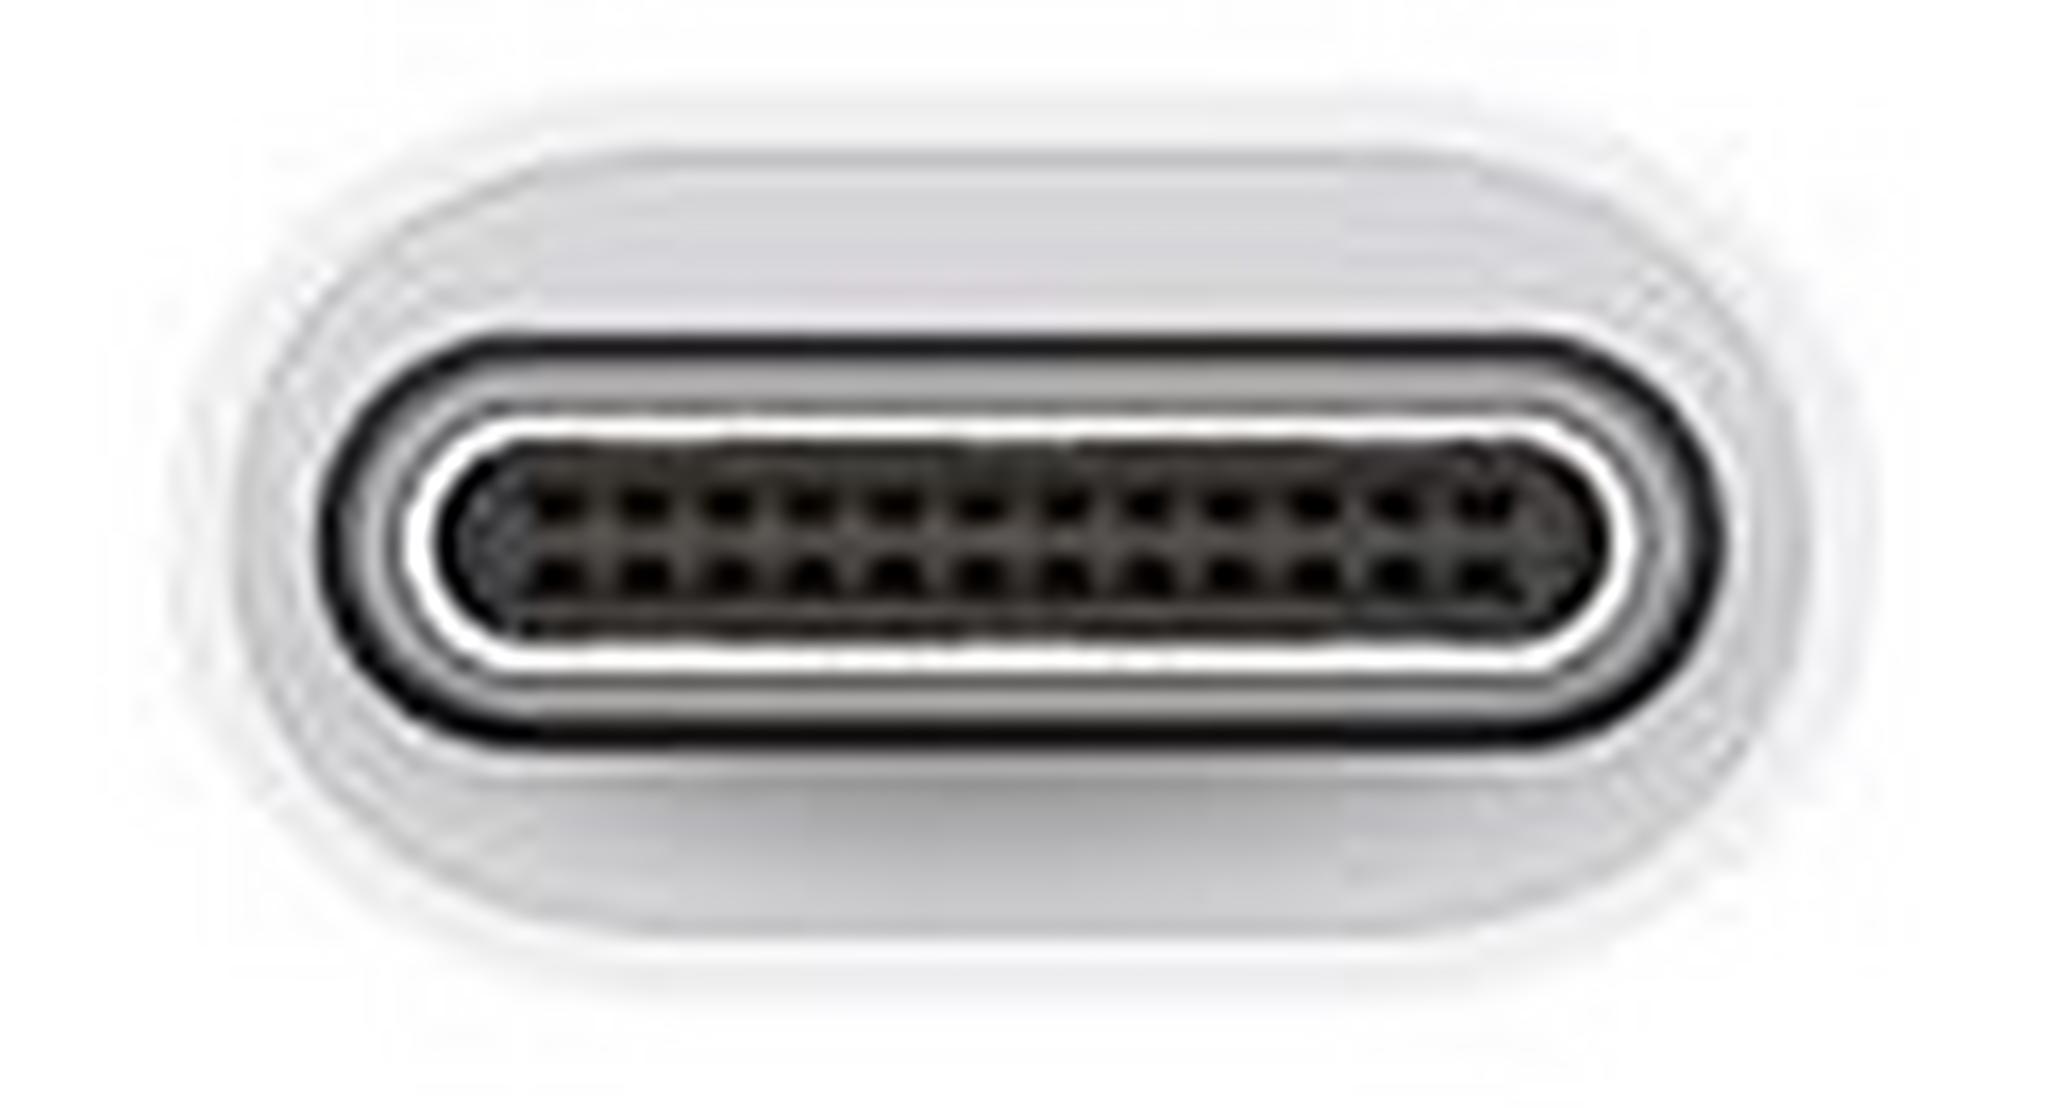 Apple USB-C to USB Adapter - MJ1M2AM/A